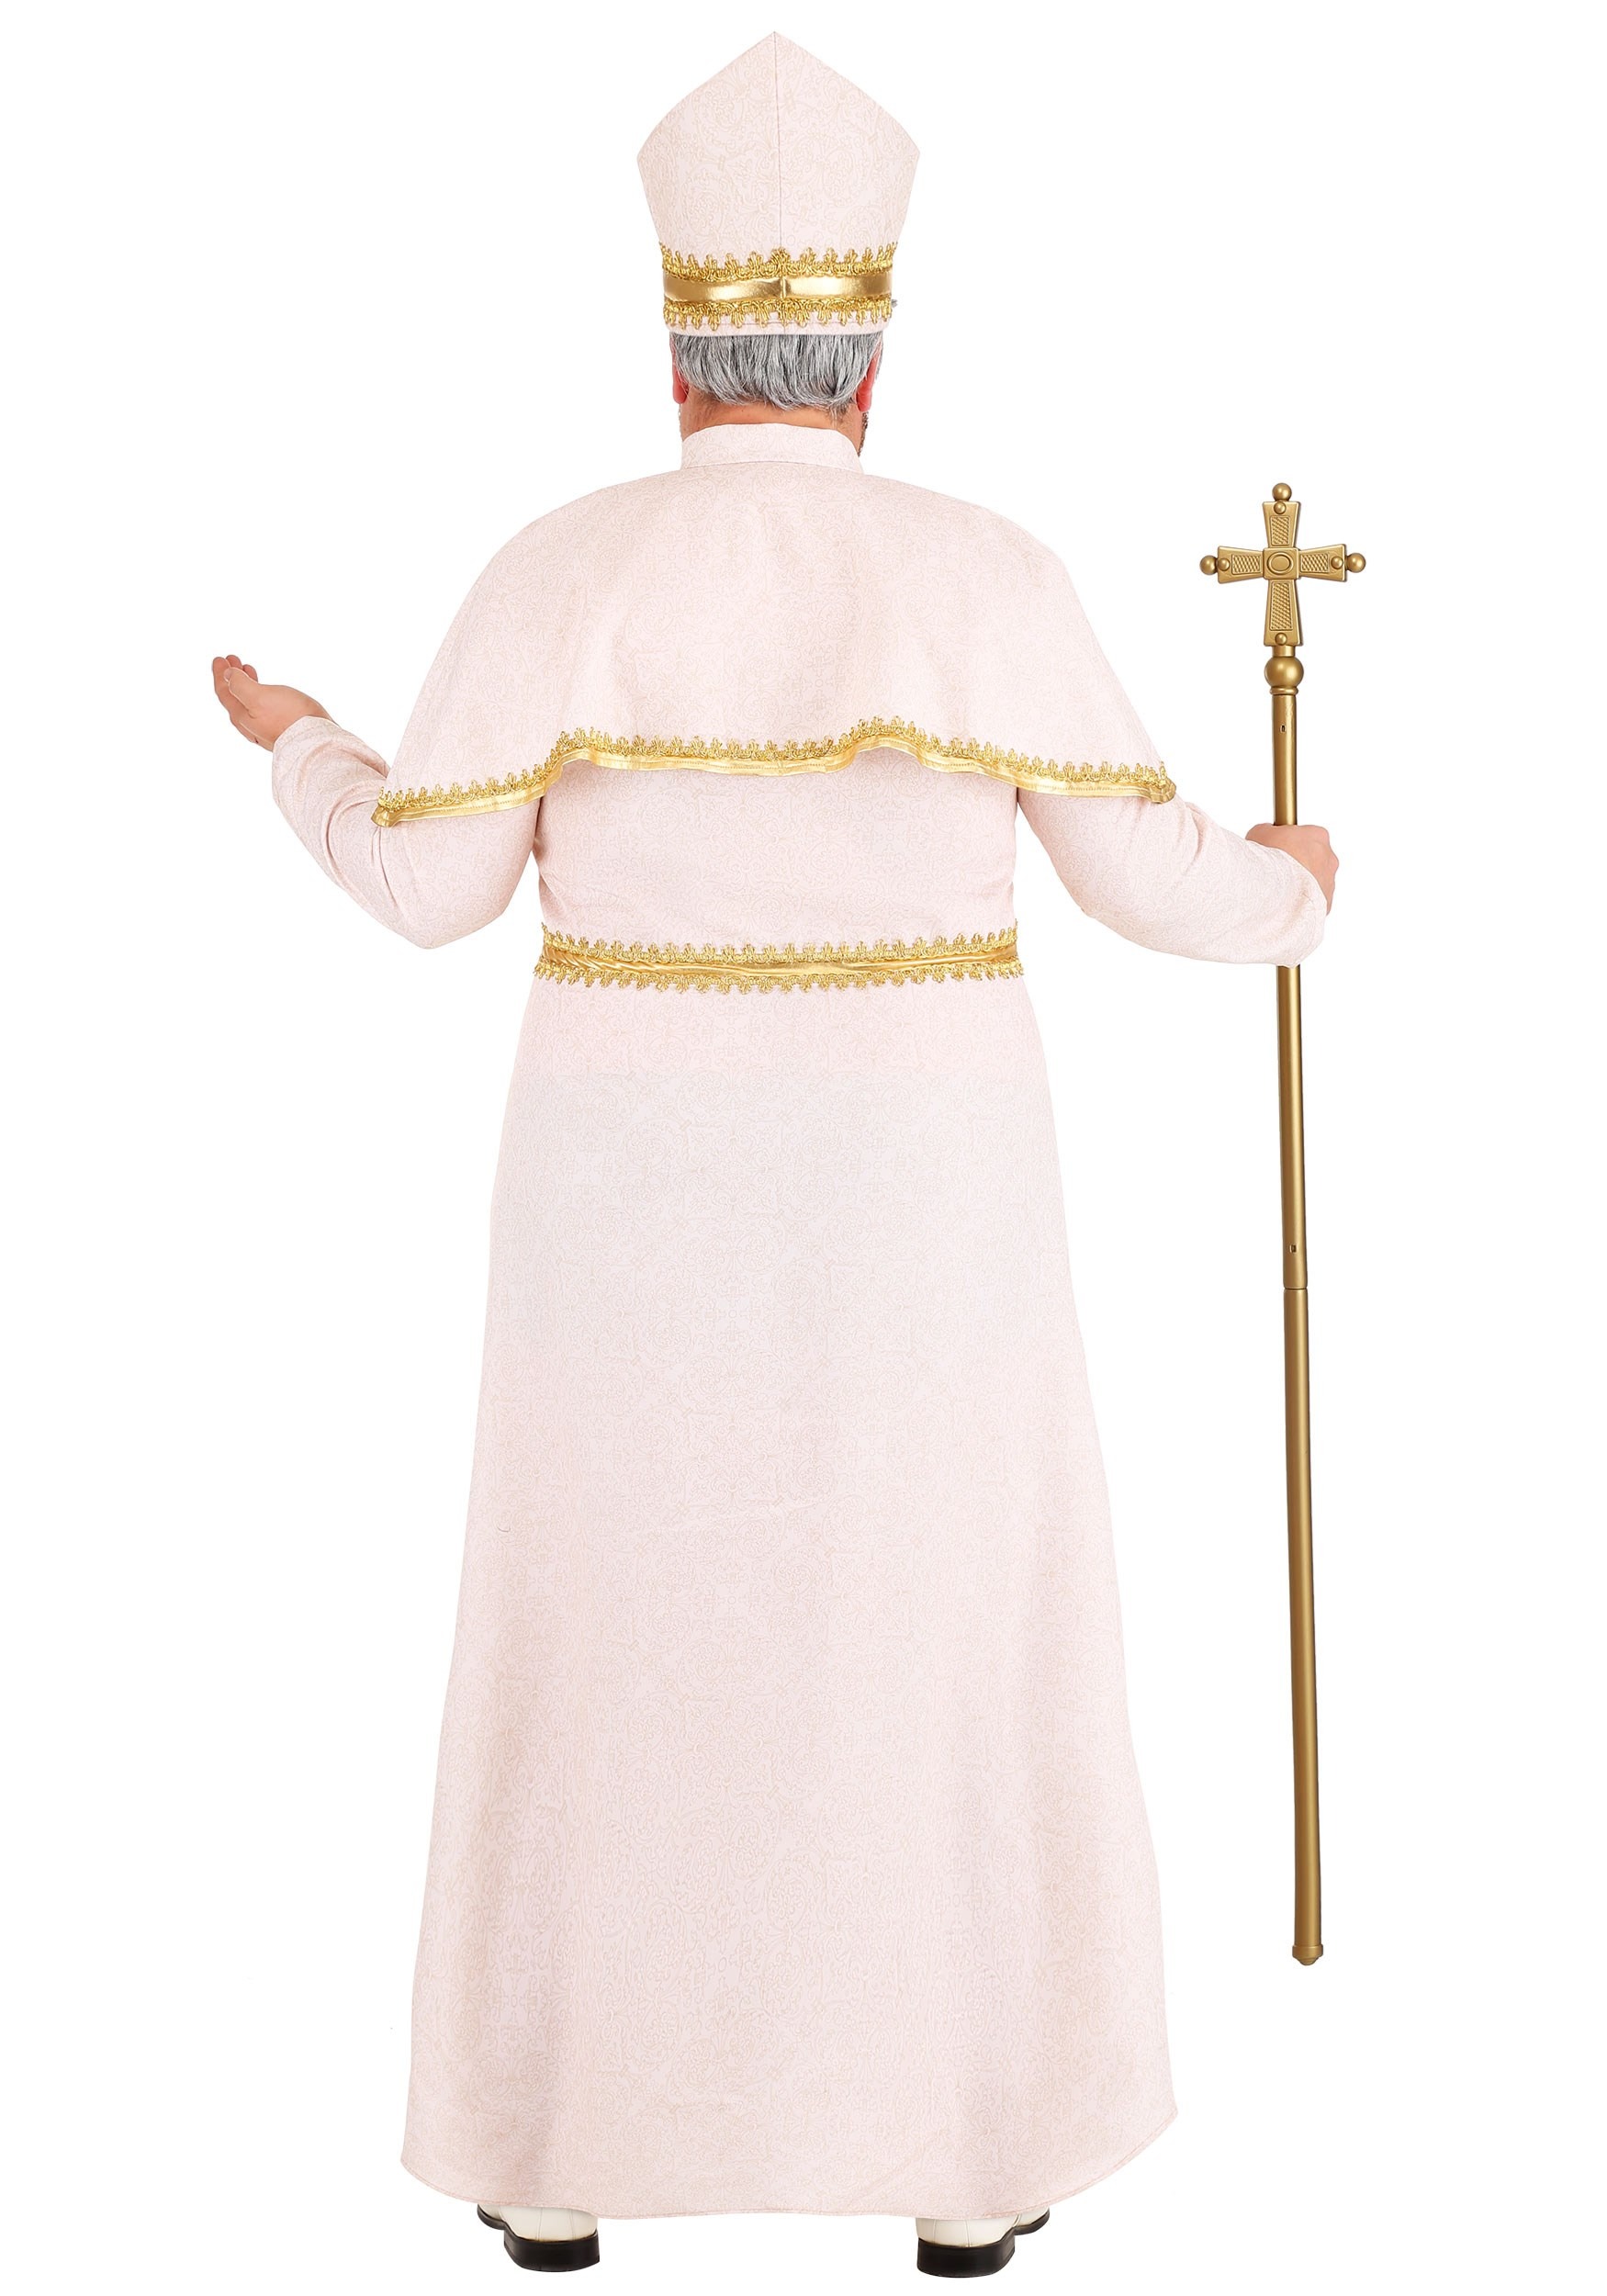 Men's Plus Size Pious Pope Fancy Dress Costume